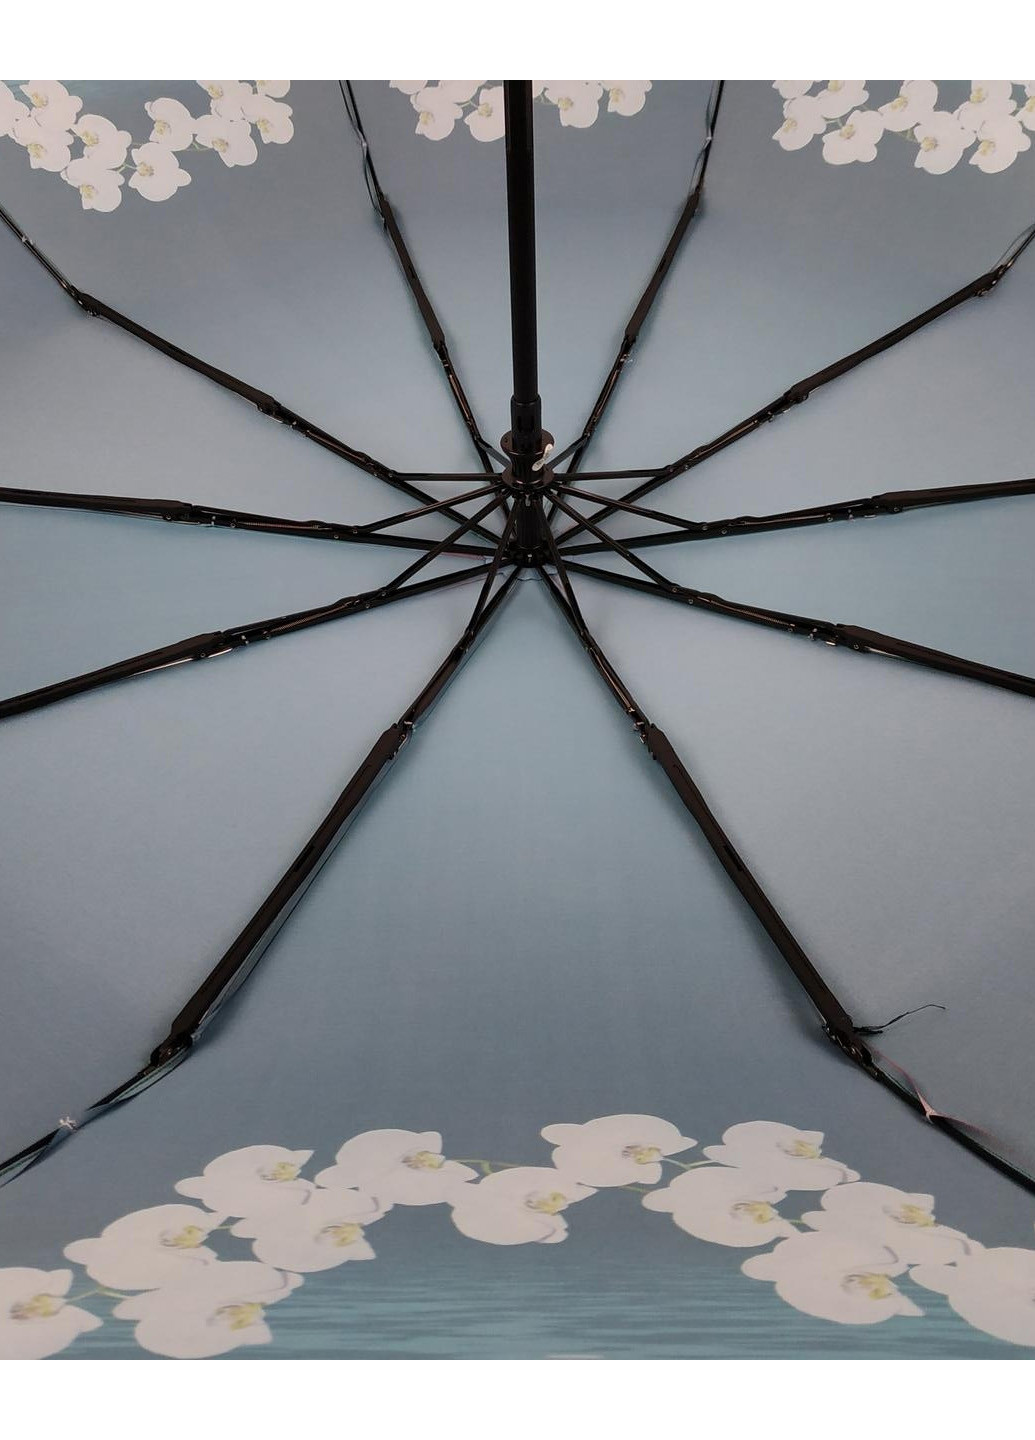 Жіночий автоматичний парасольку (734) 98 см Flagman (189979125)